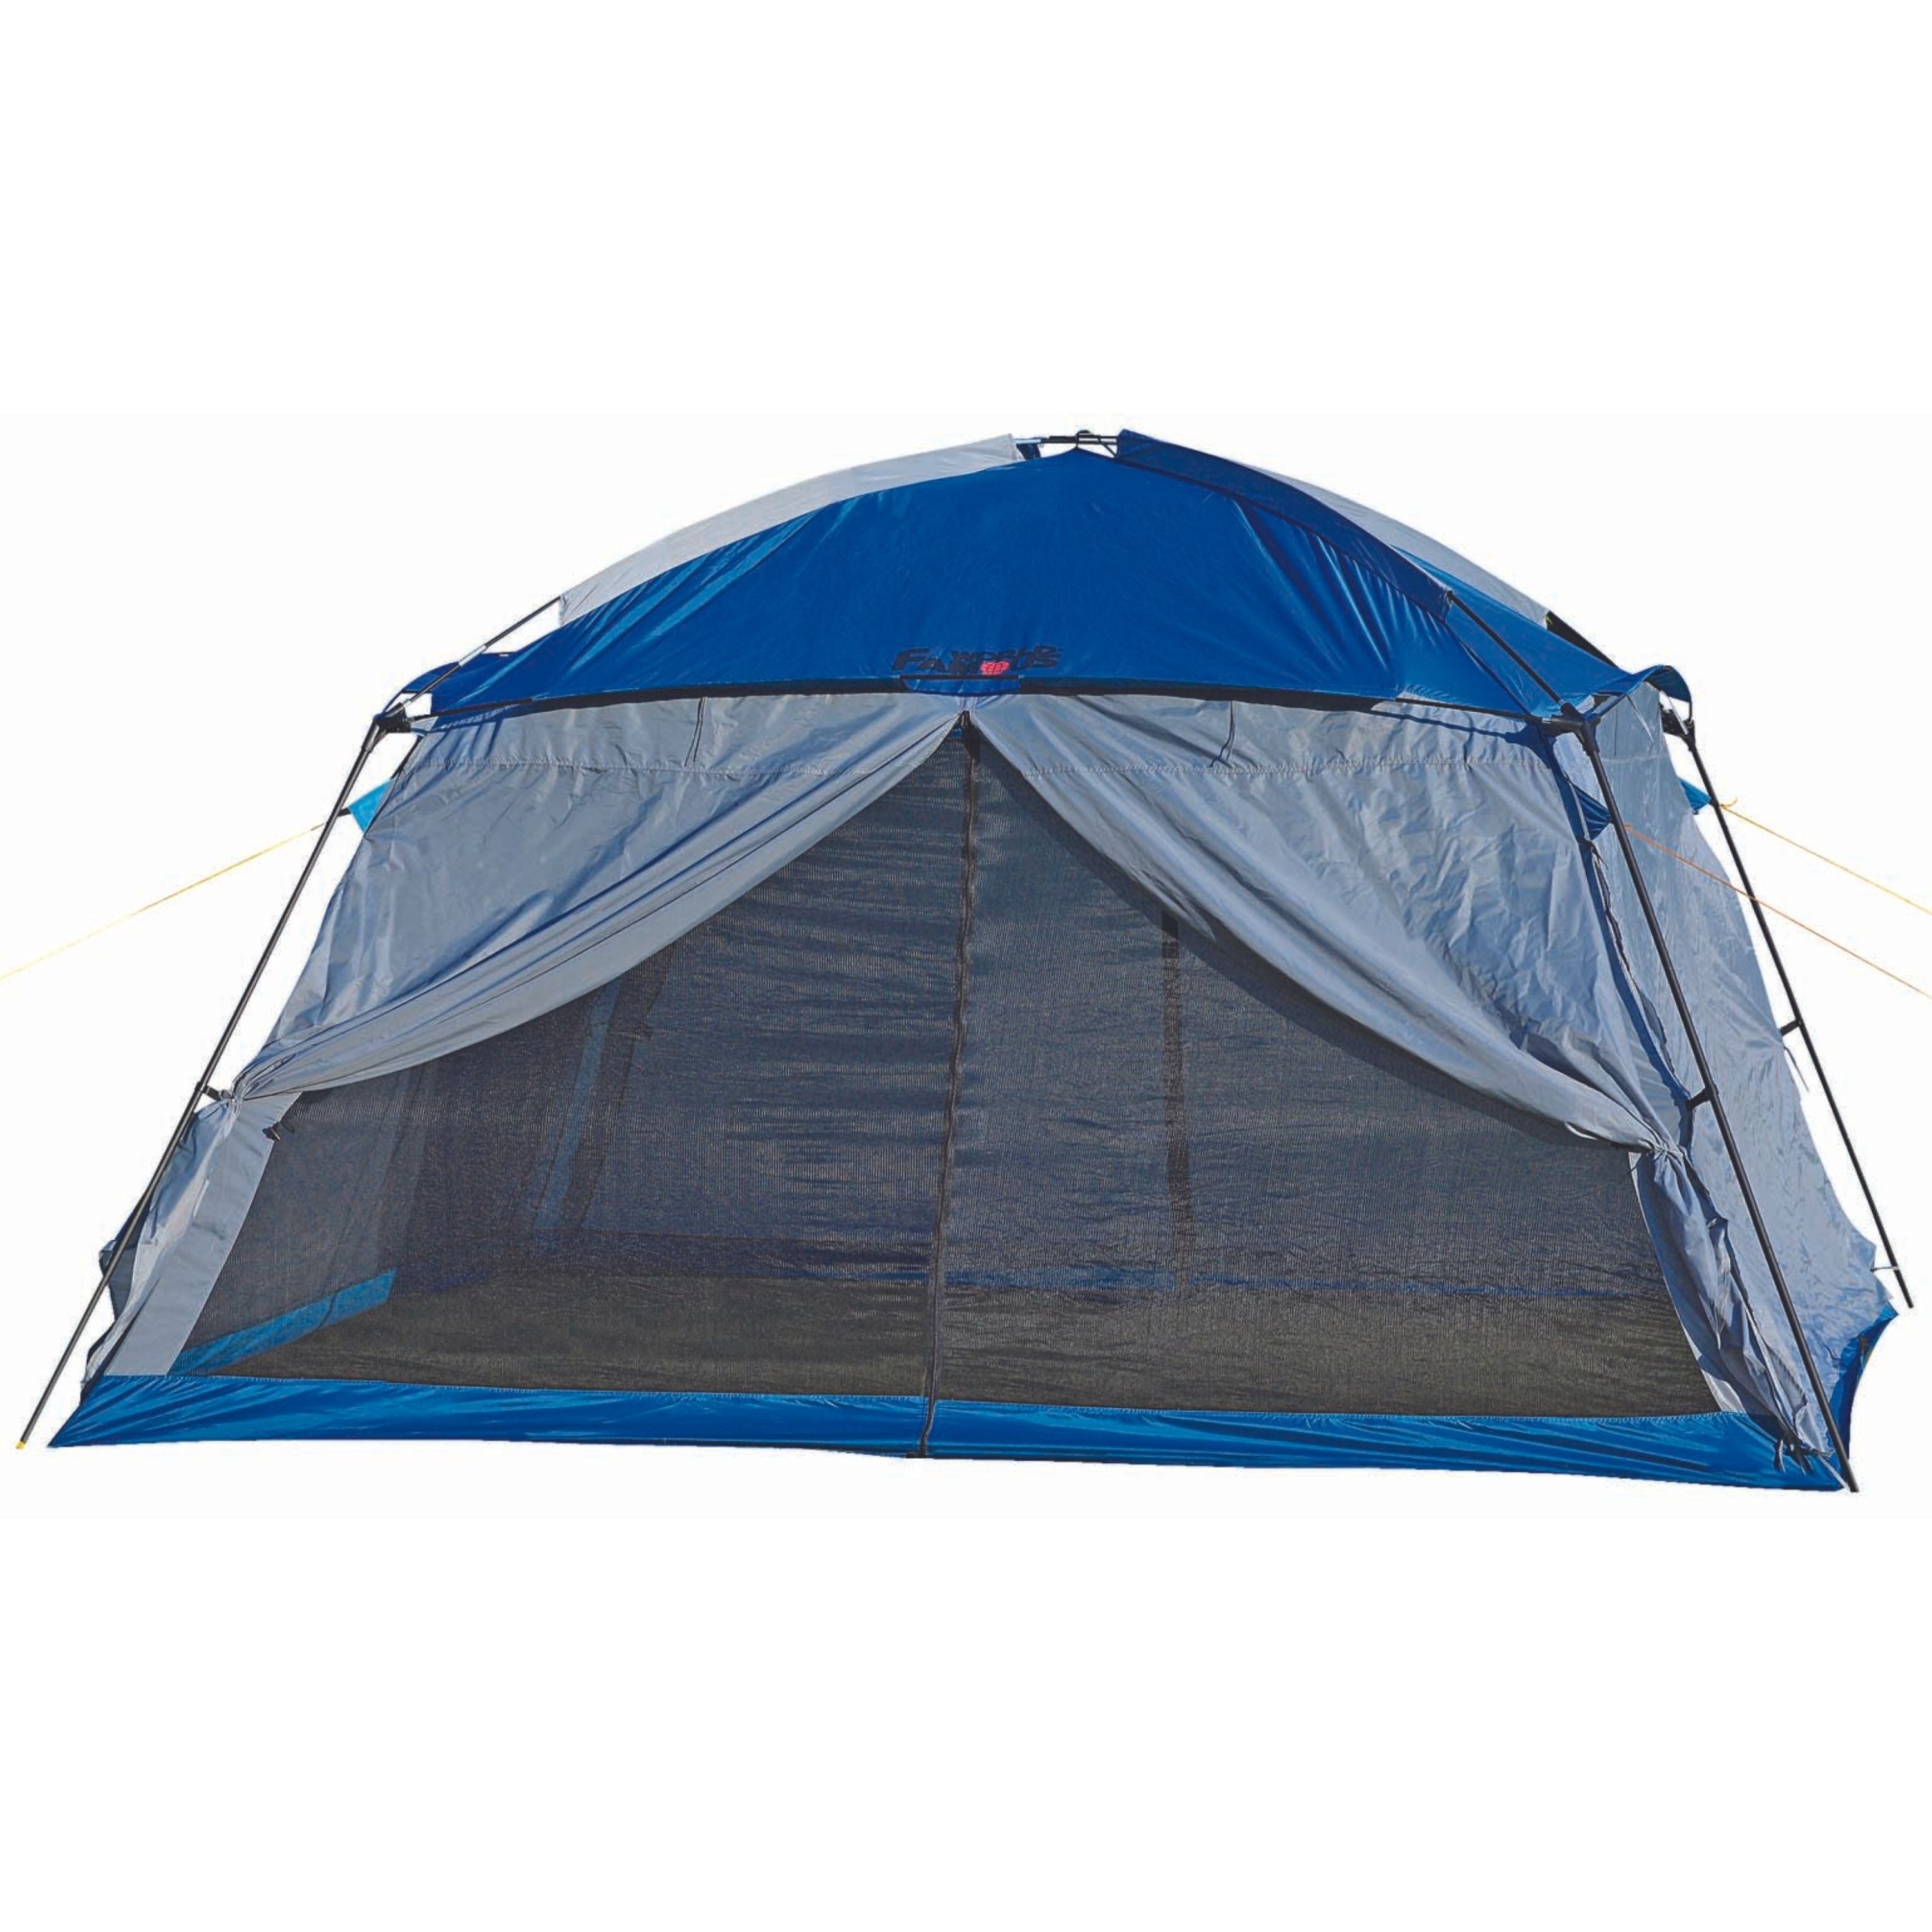 Mosquito net tent "Hobo"